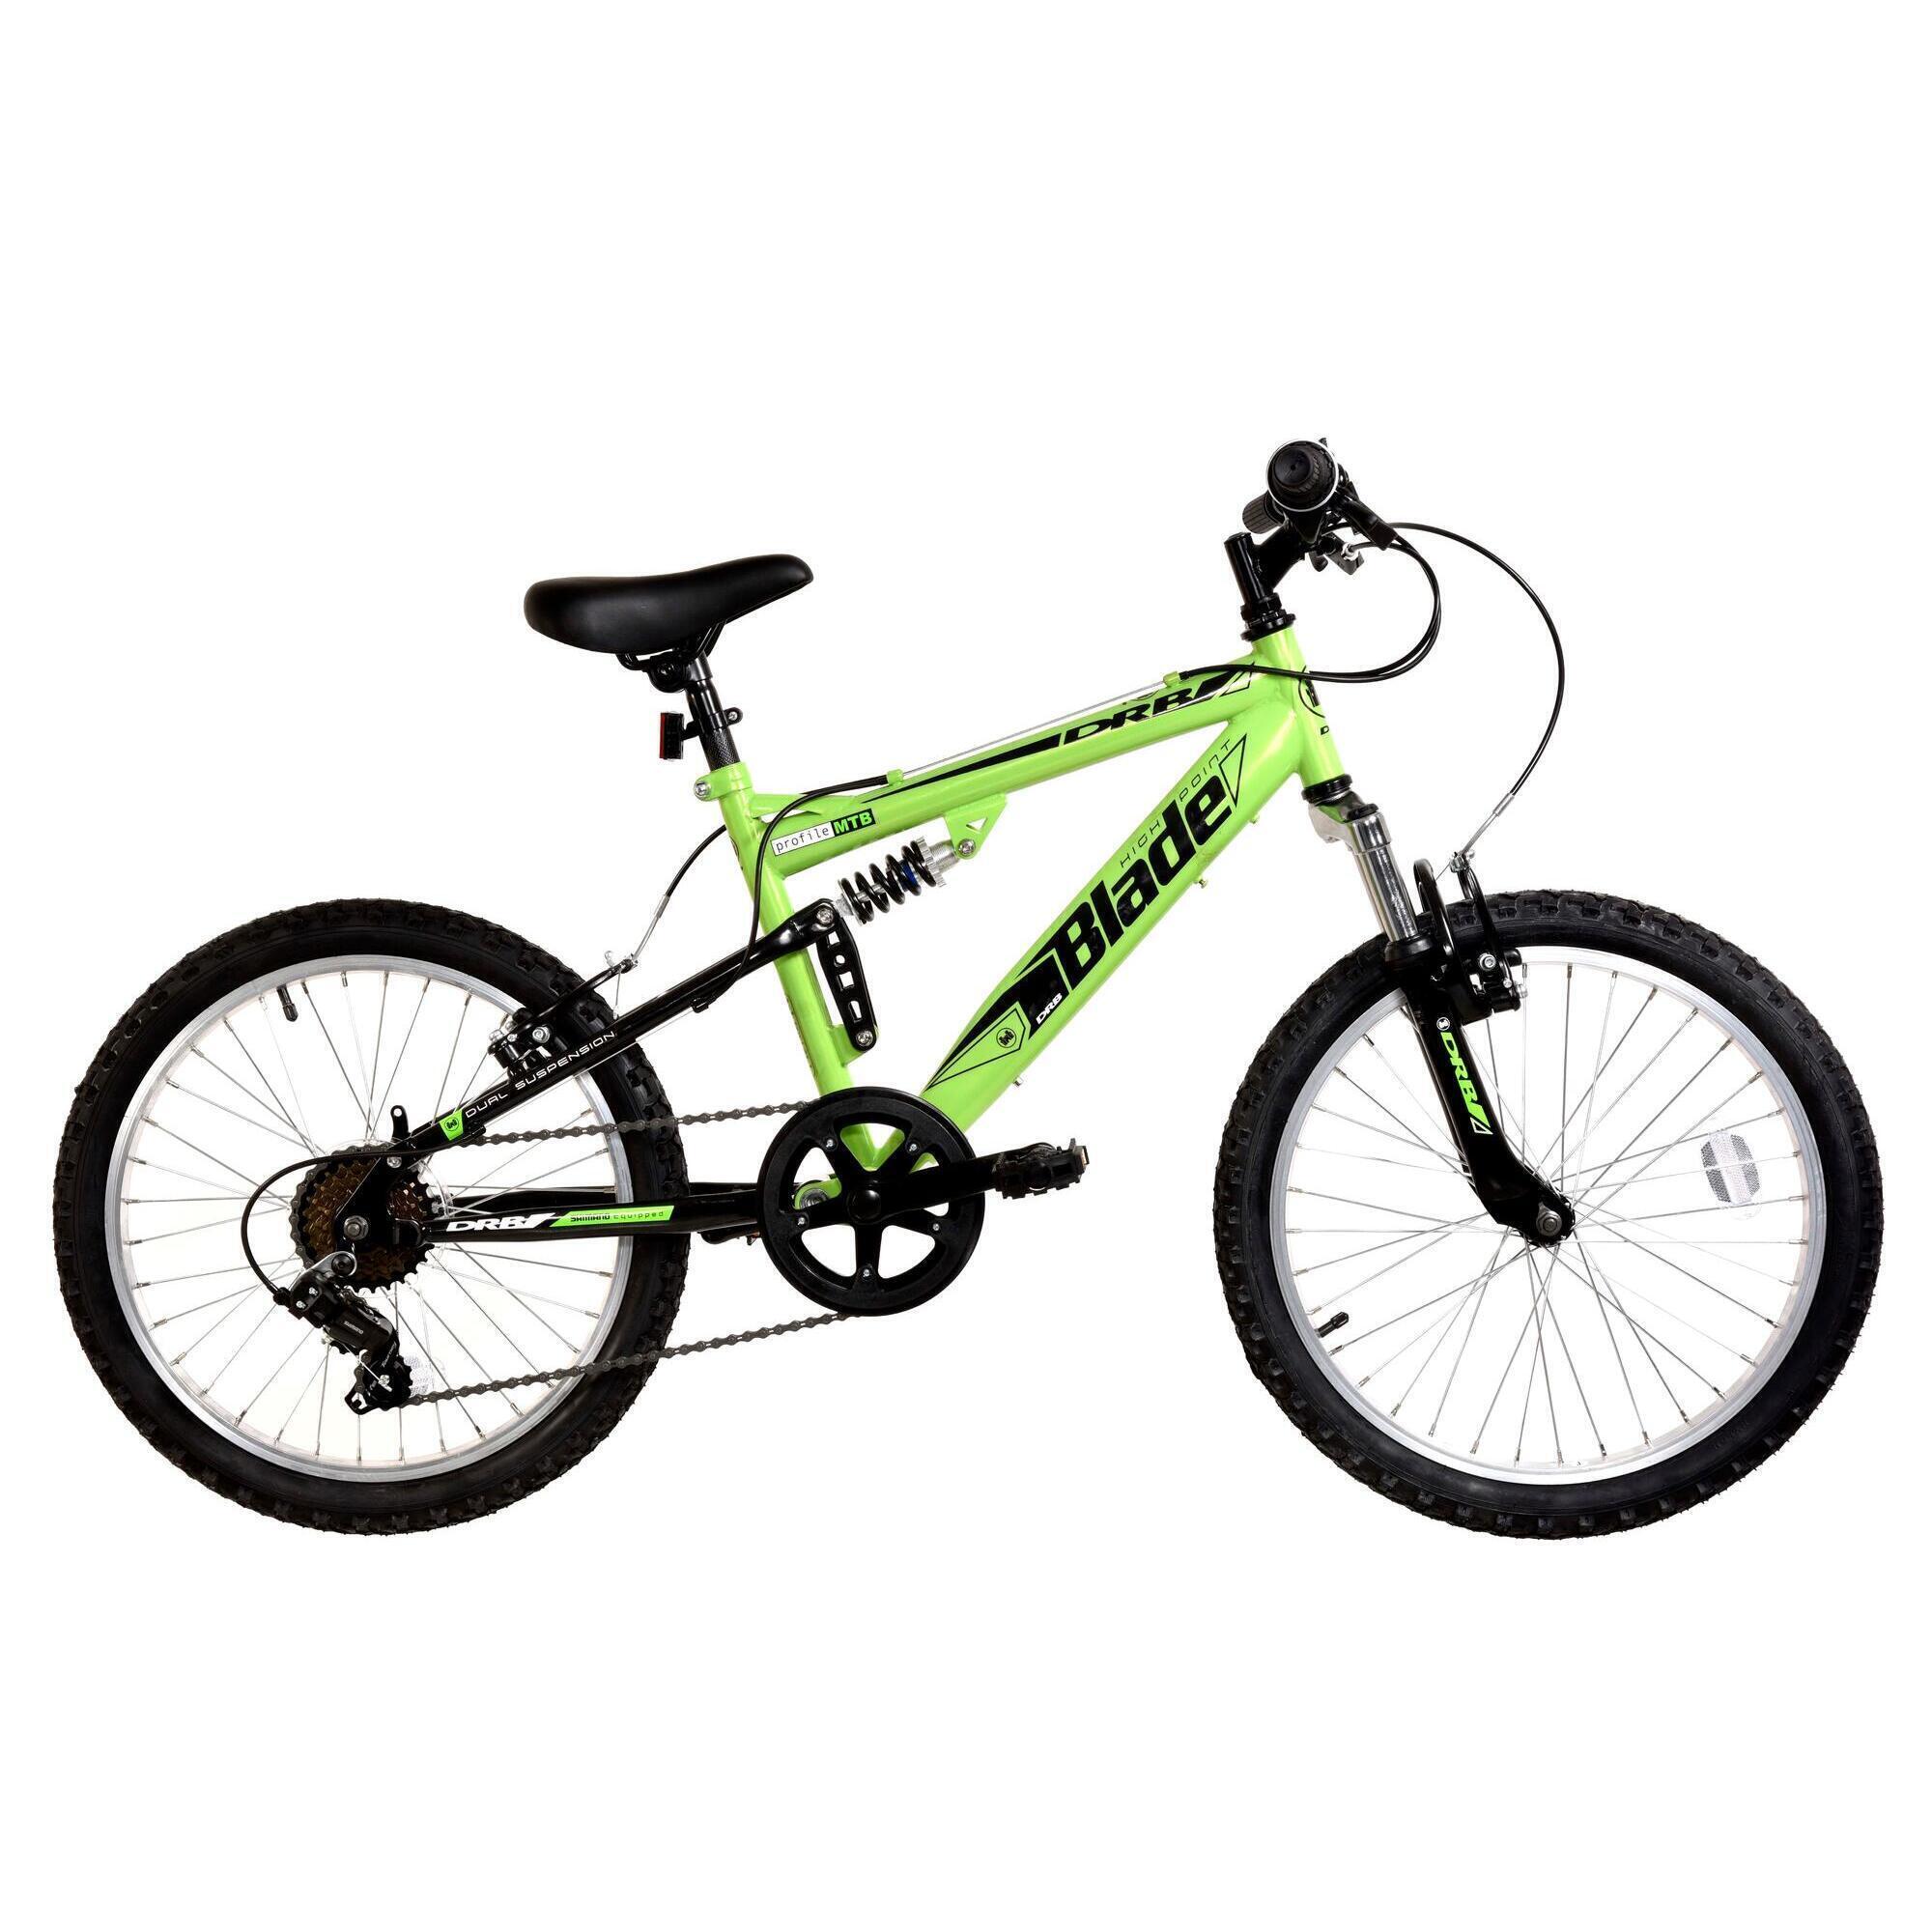 DALLINGRIDGE Dallingridge Blade Junior Full Sus Mountain Bike, 20In Wheel - Lime Green